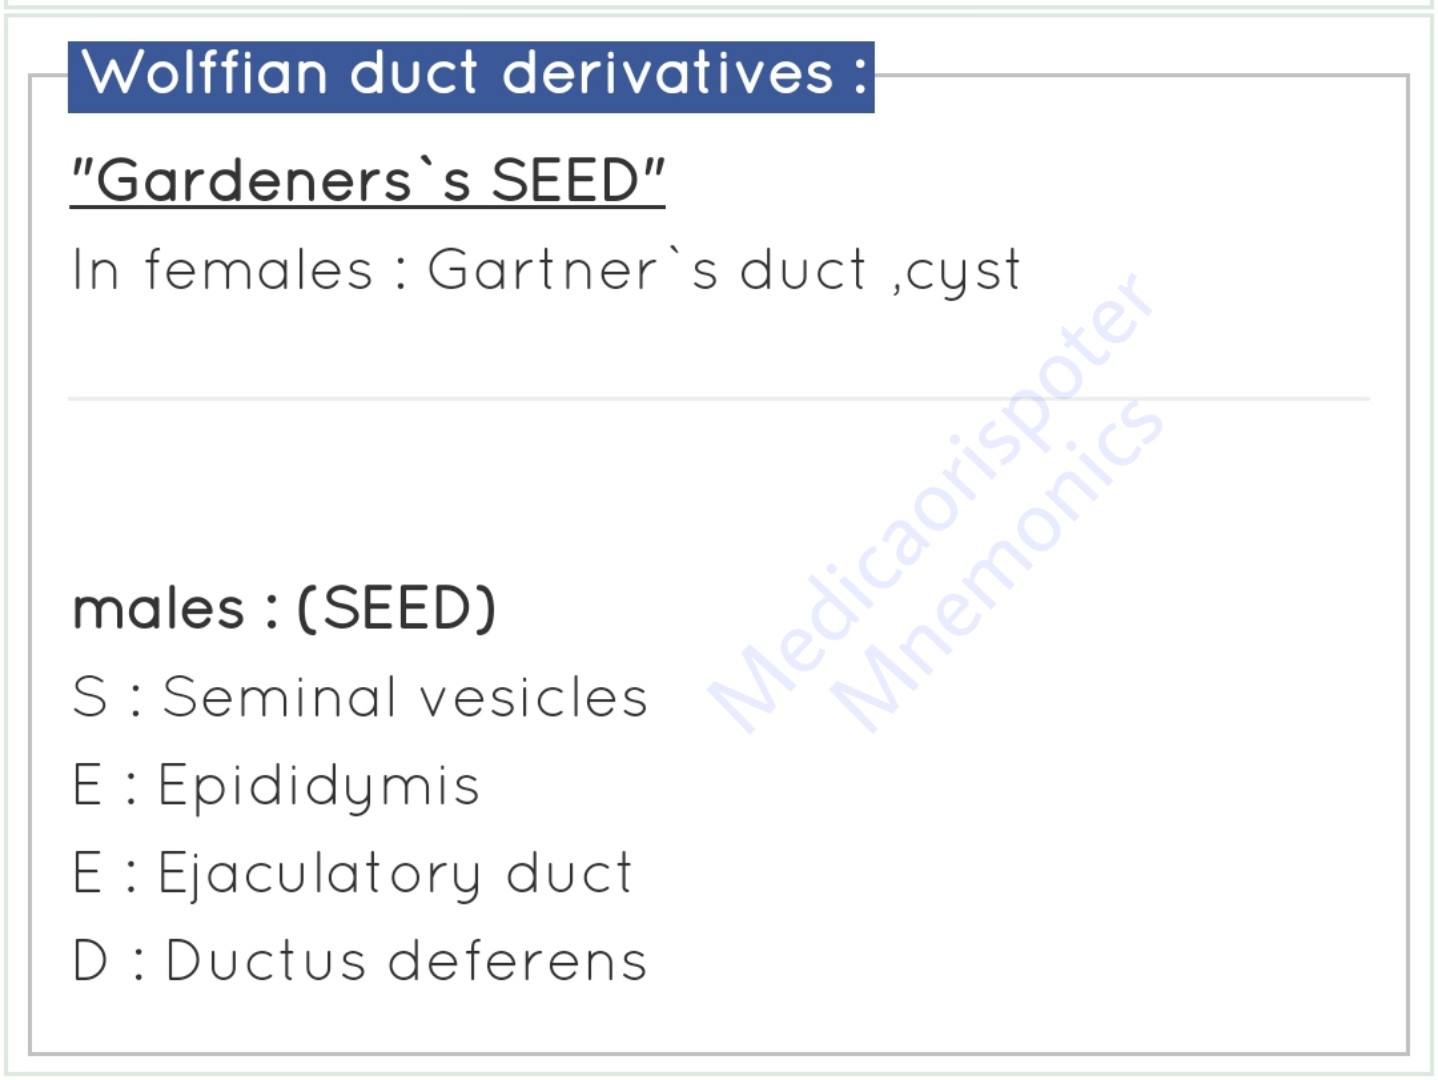 Derivatives of Wolffian Duct